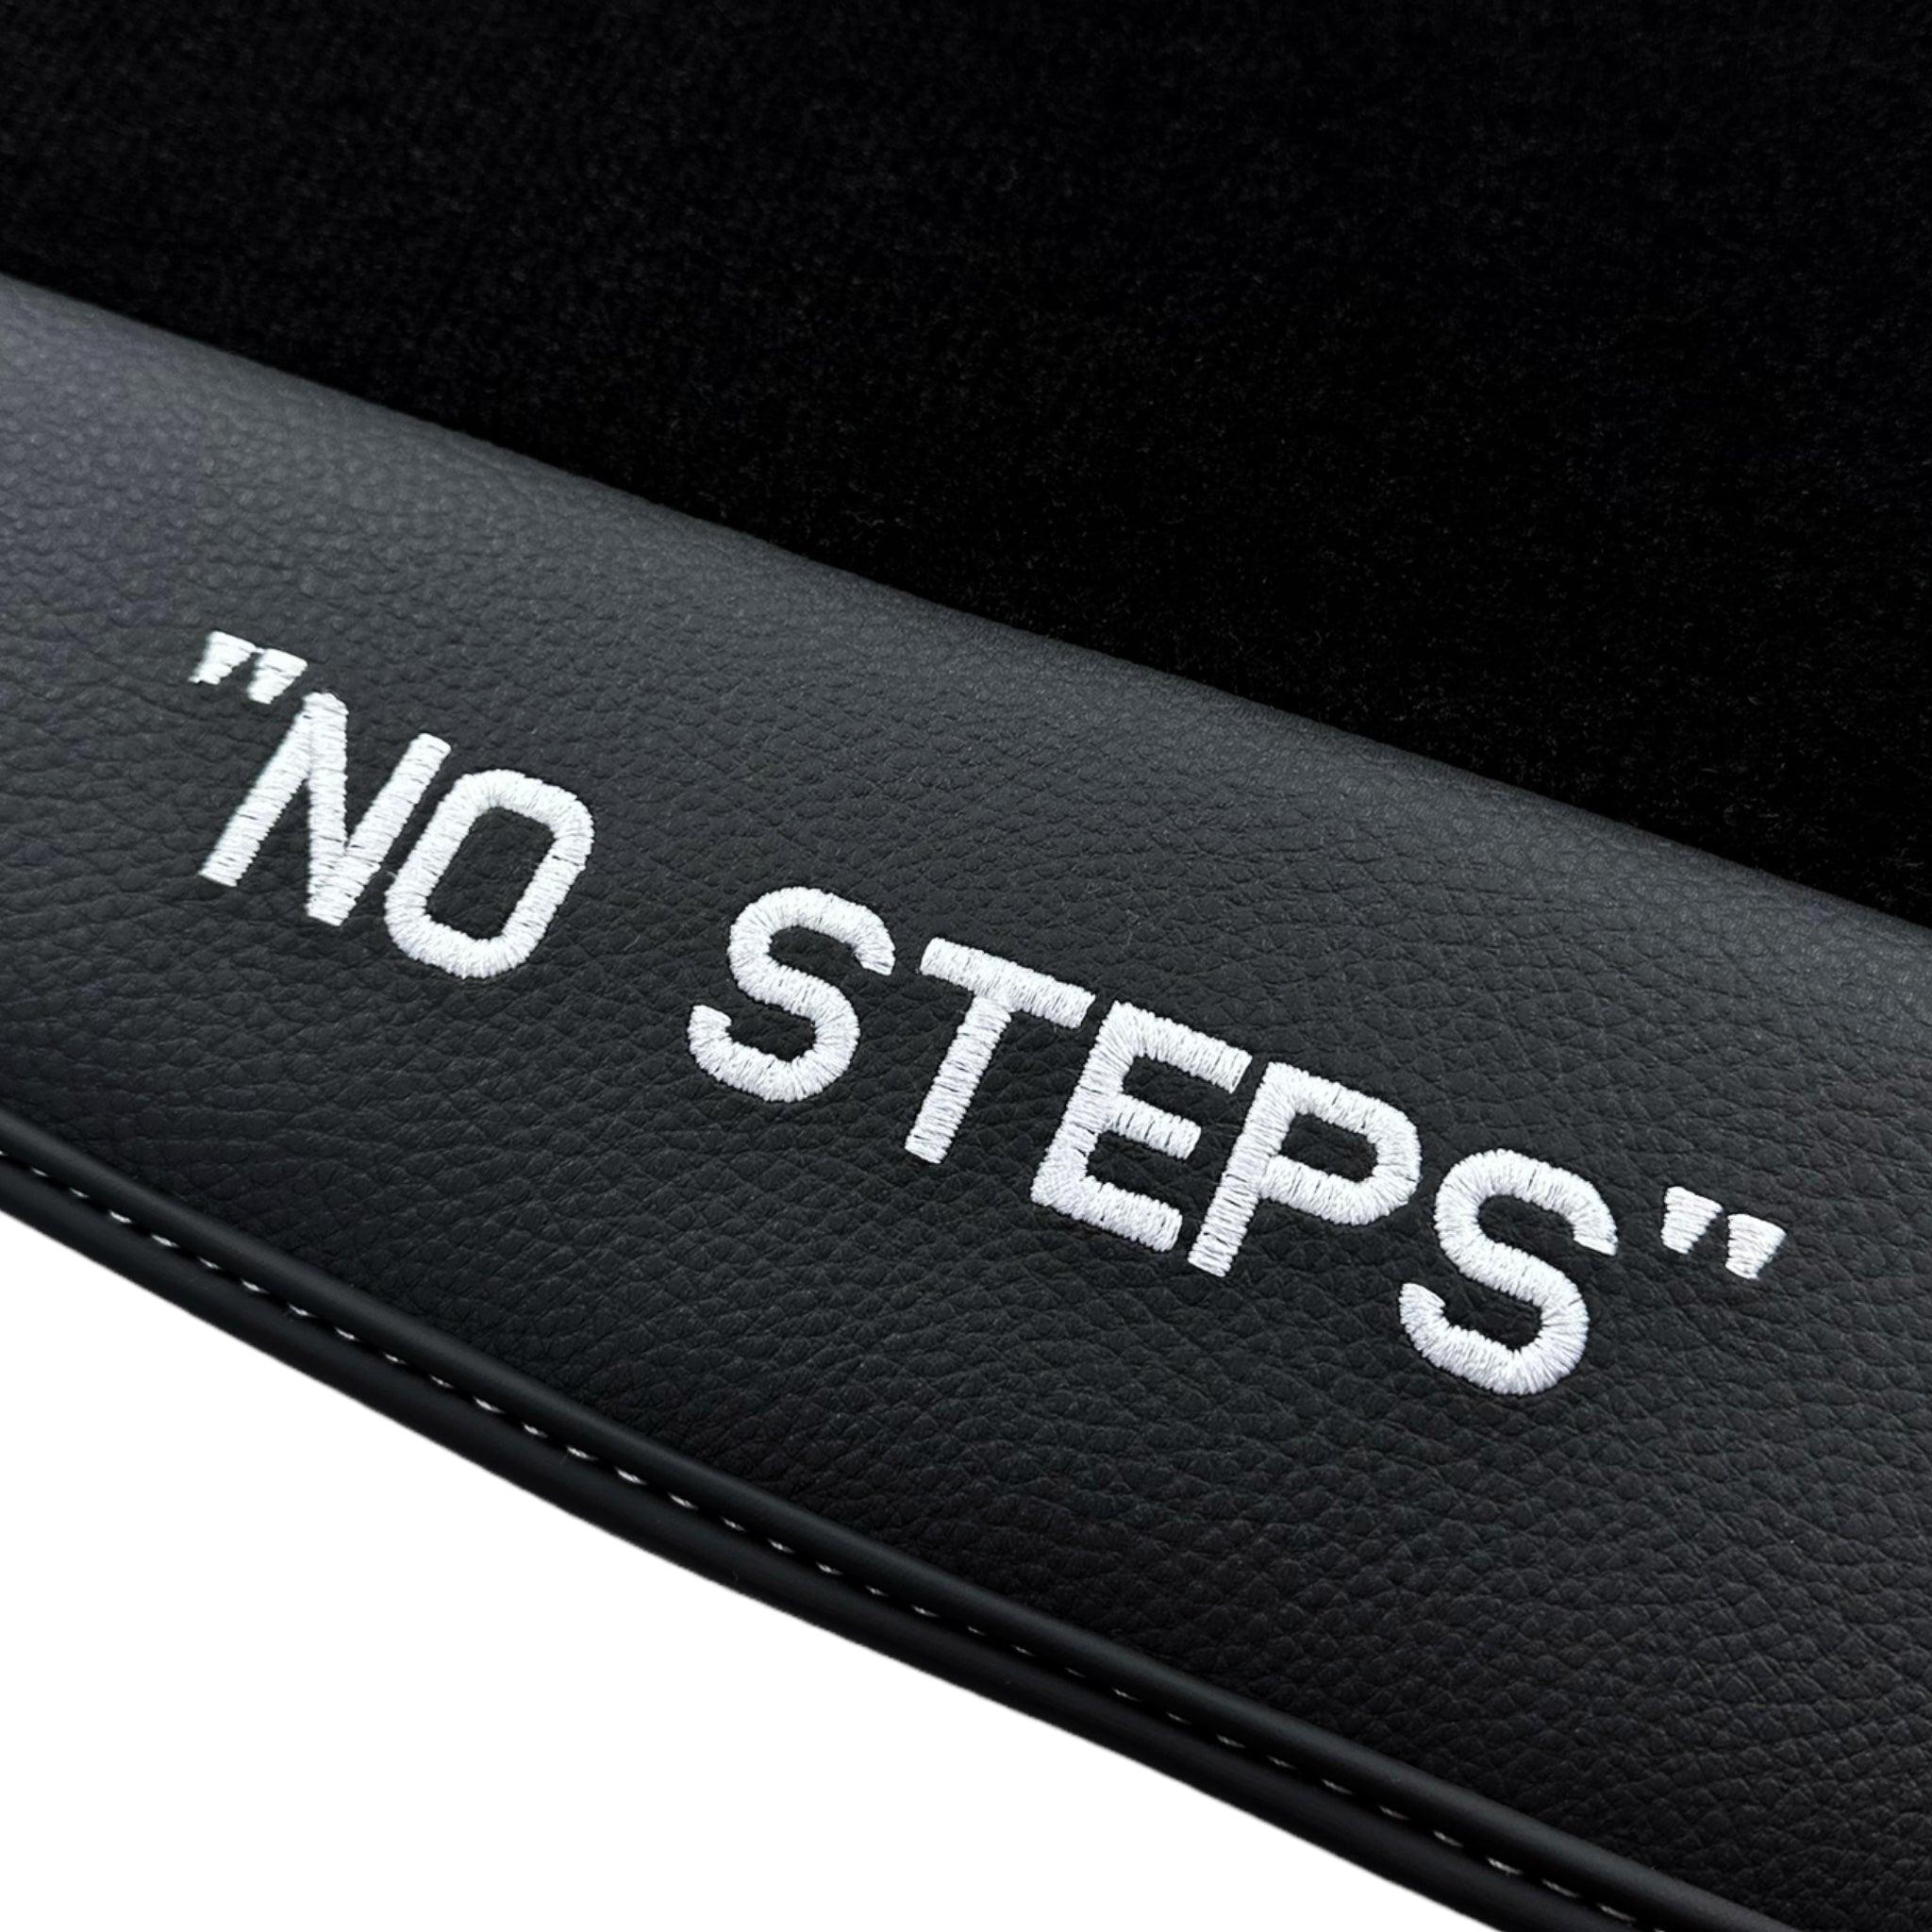 Black Floor Mats for Audi A3 - 5-door Sportback (2013-2020) | No Steps Edition